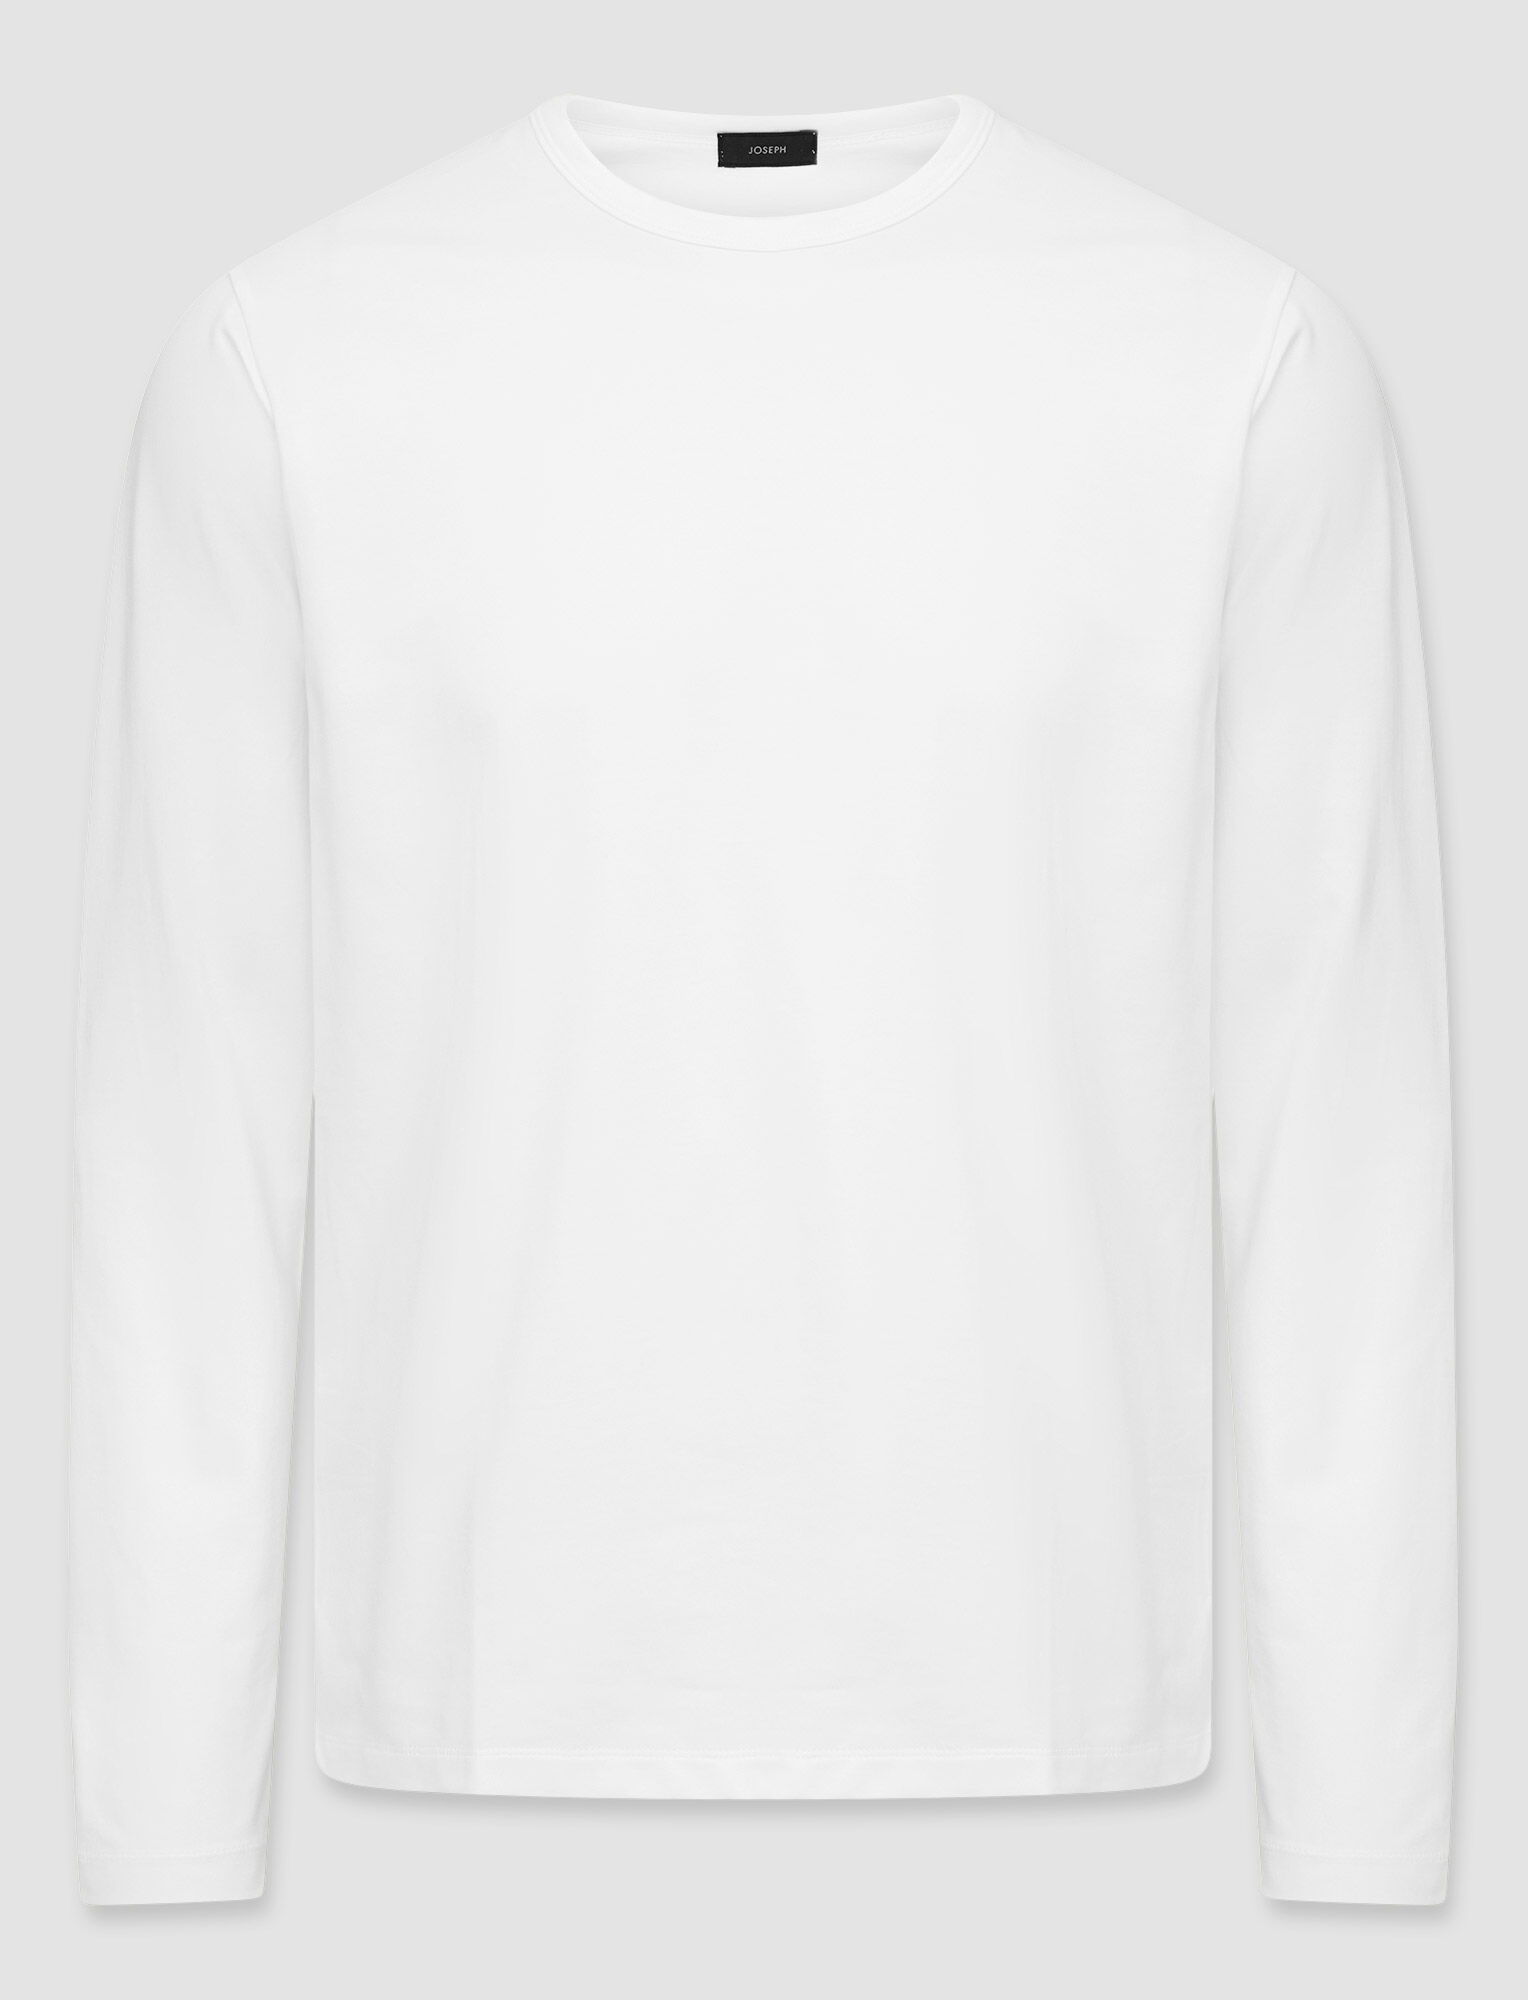 Joseph, Suvin Soft Crew Neck Long Sleeve T-shirt, in White